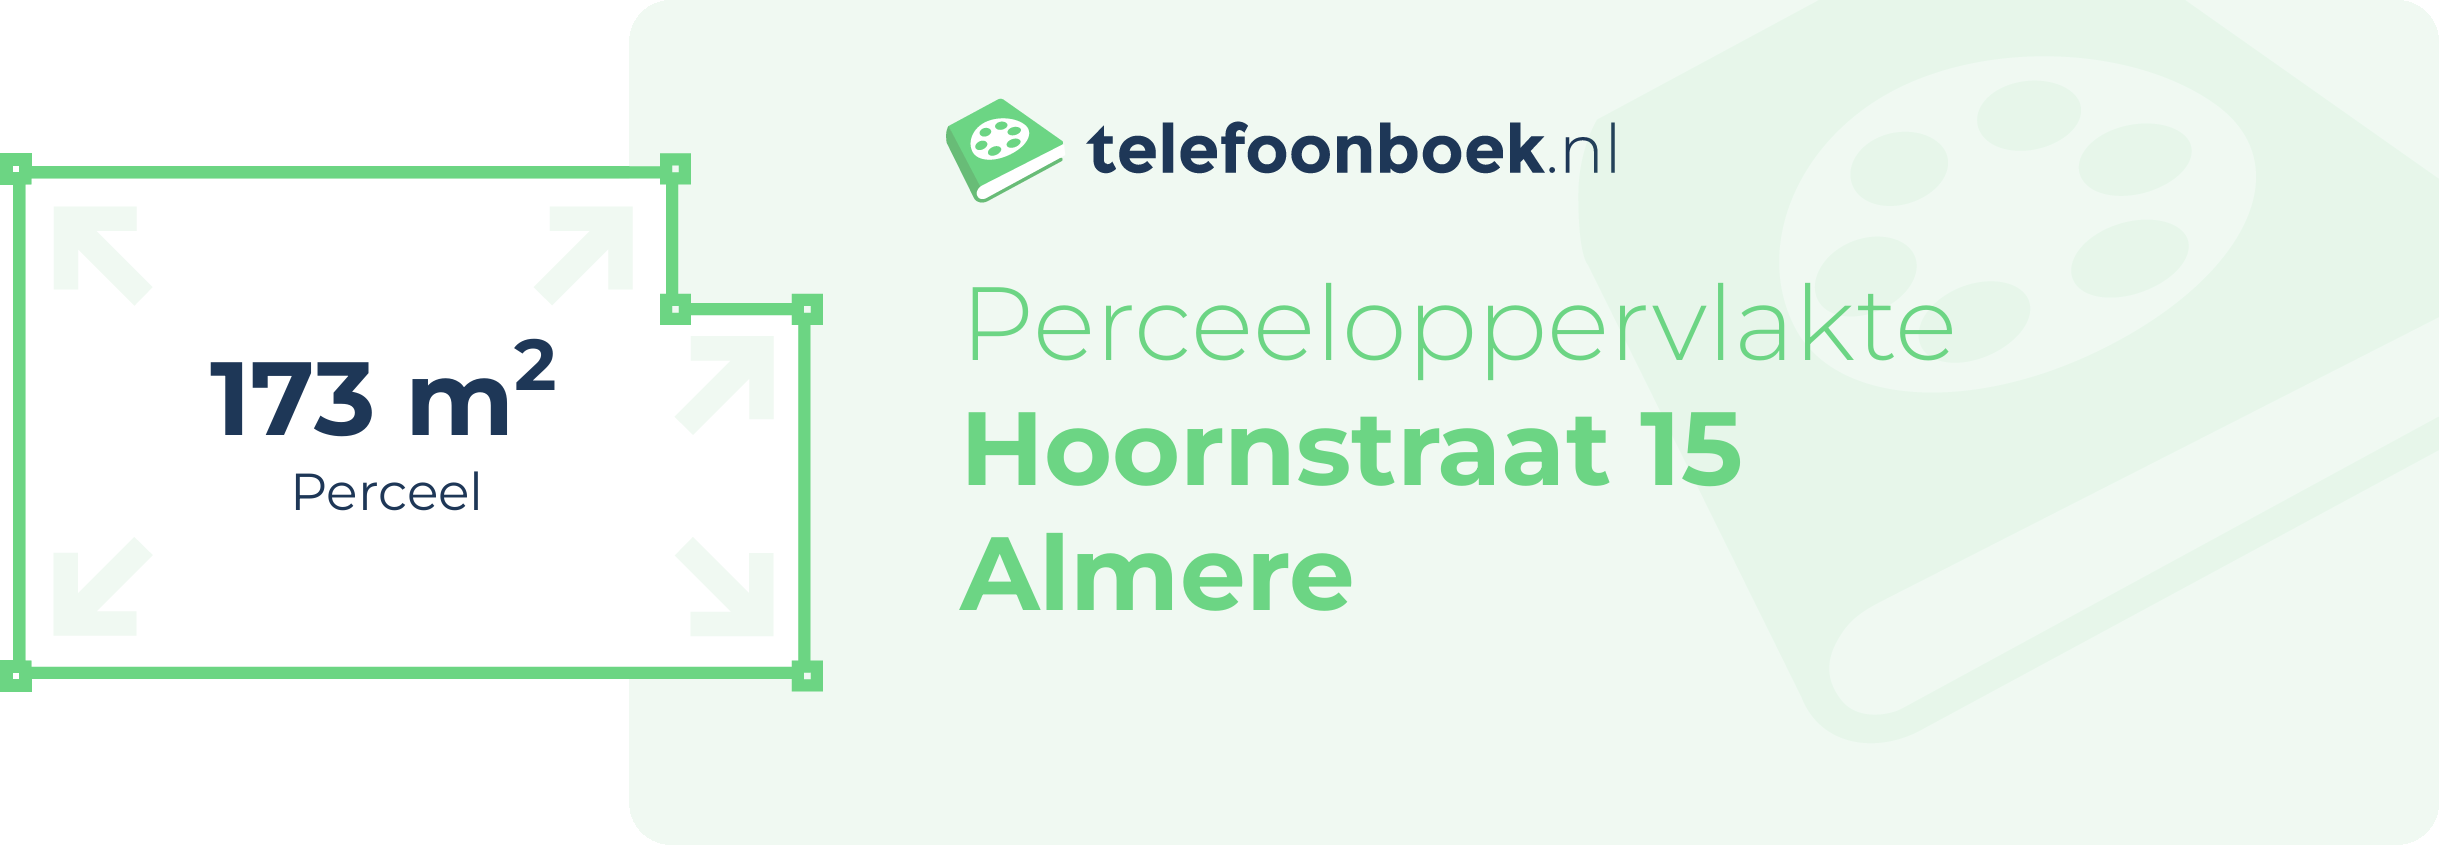 Perceeloppervlakte Hoornstraat 15 Almere